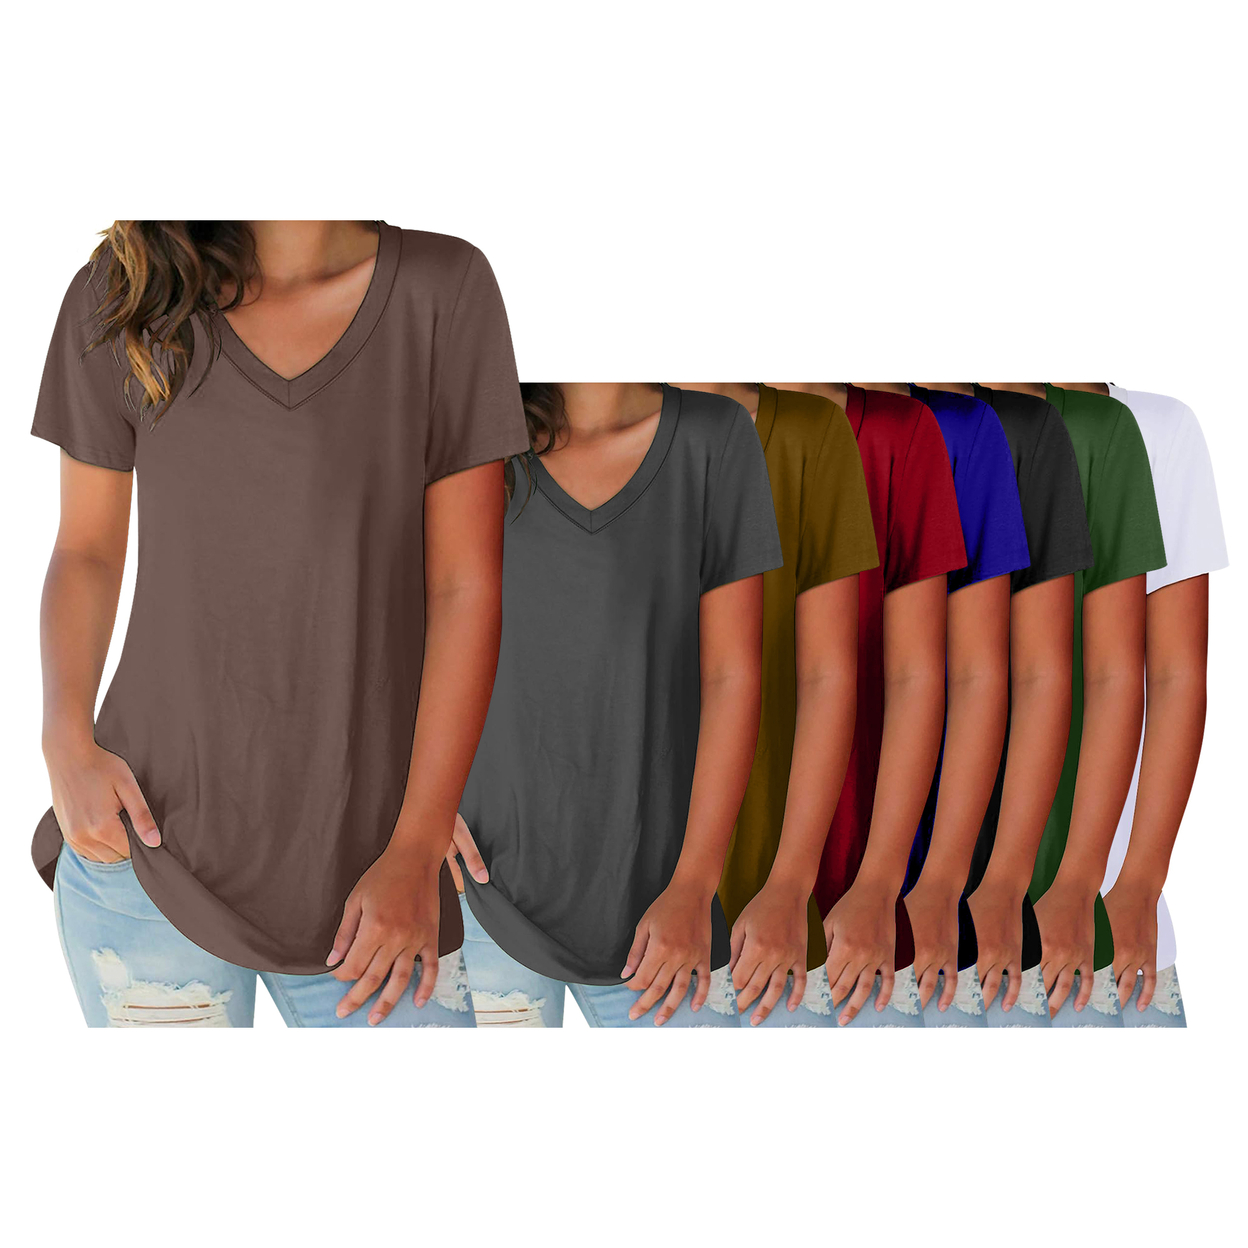 6-Pack: Women's Ultra Soft Smooth Cotton Blend Basic V-Neck Short Sleeve Shirts - Medium